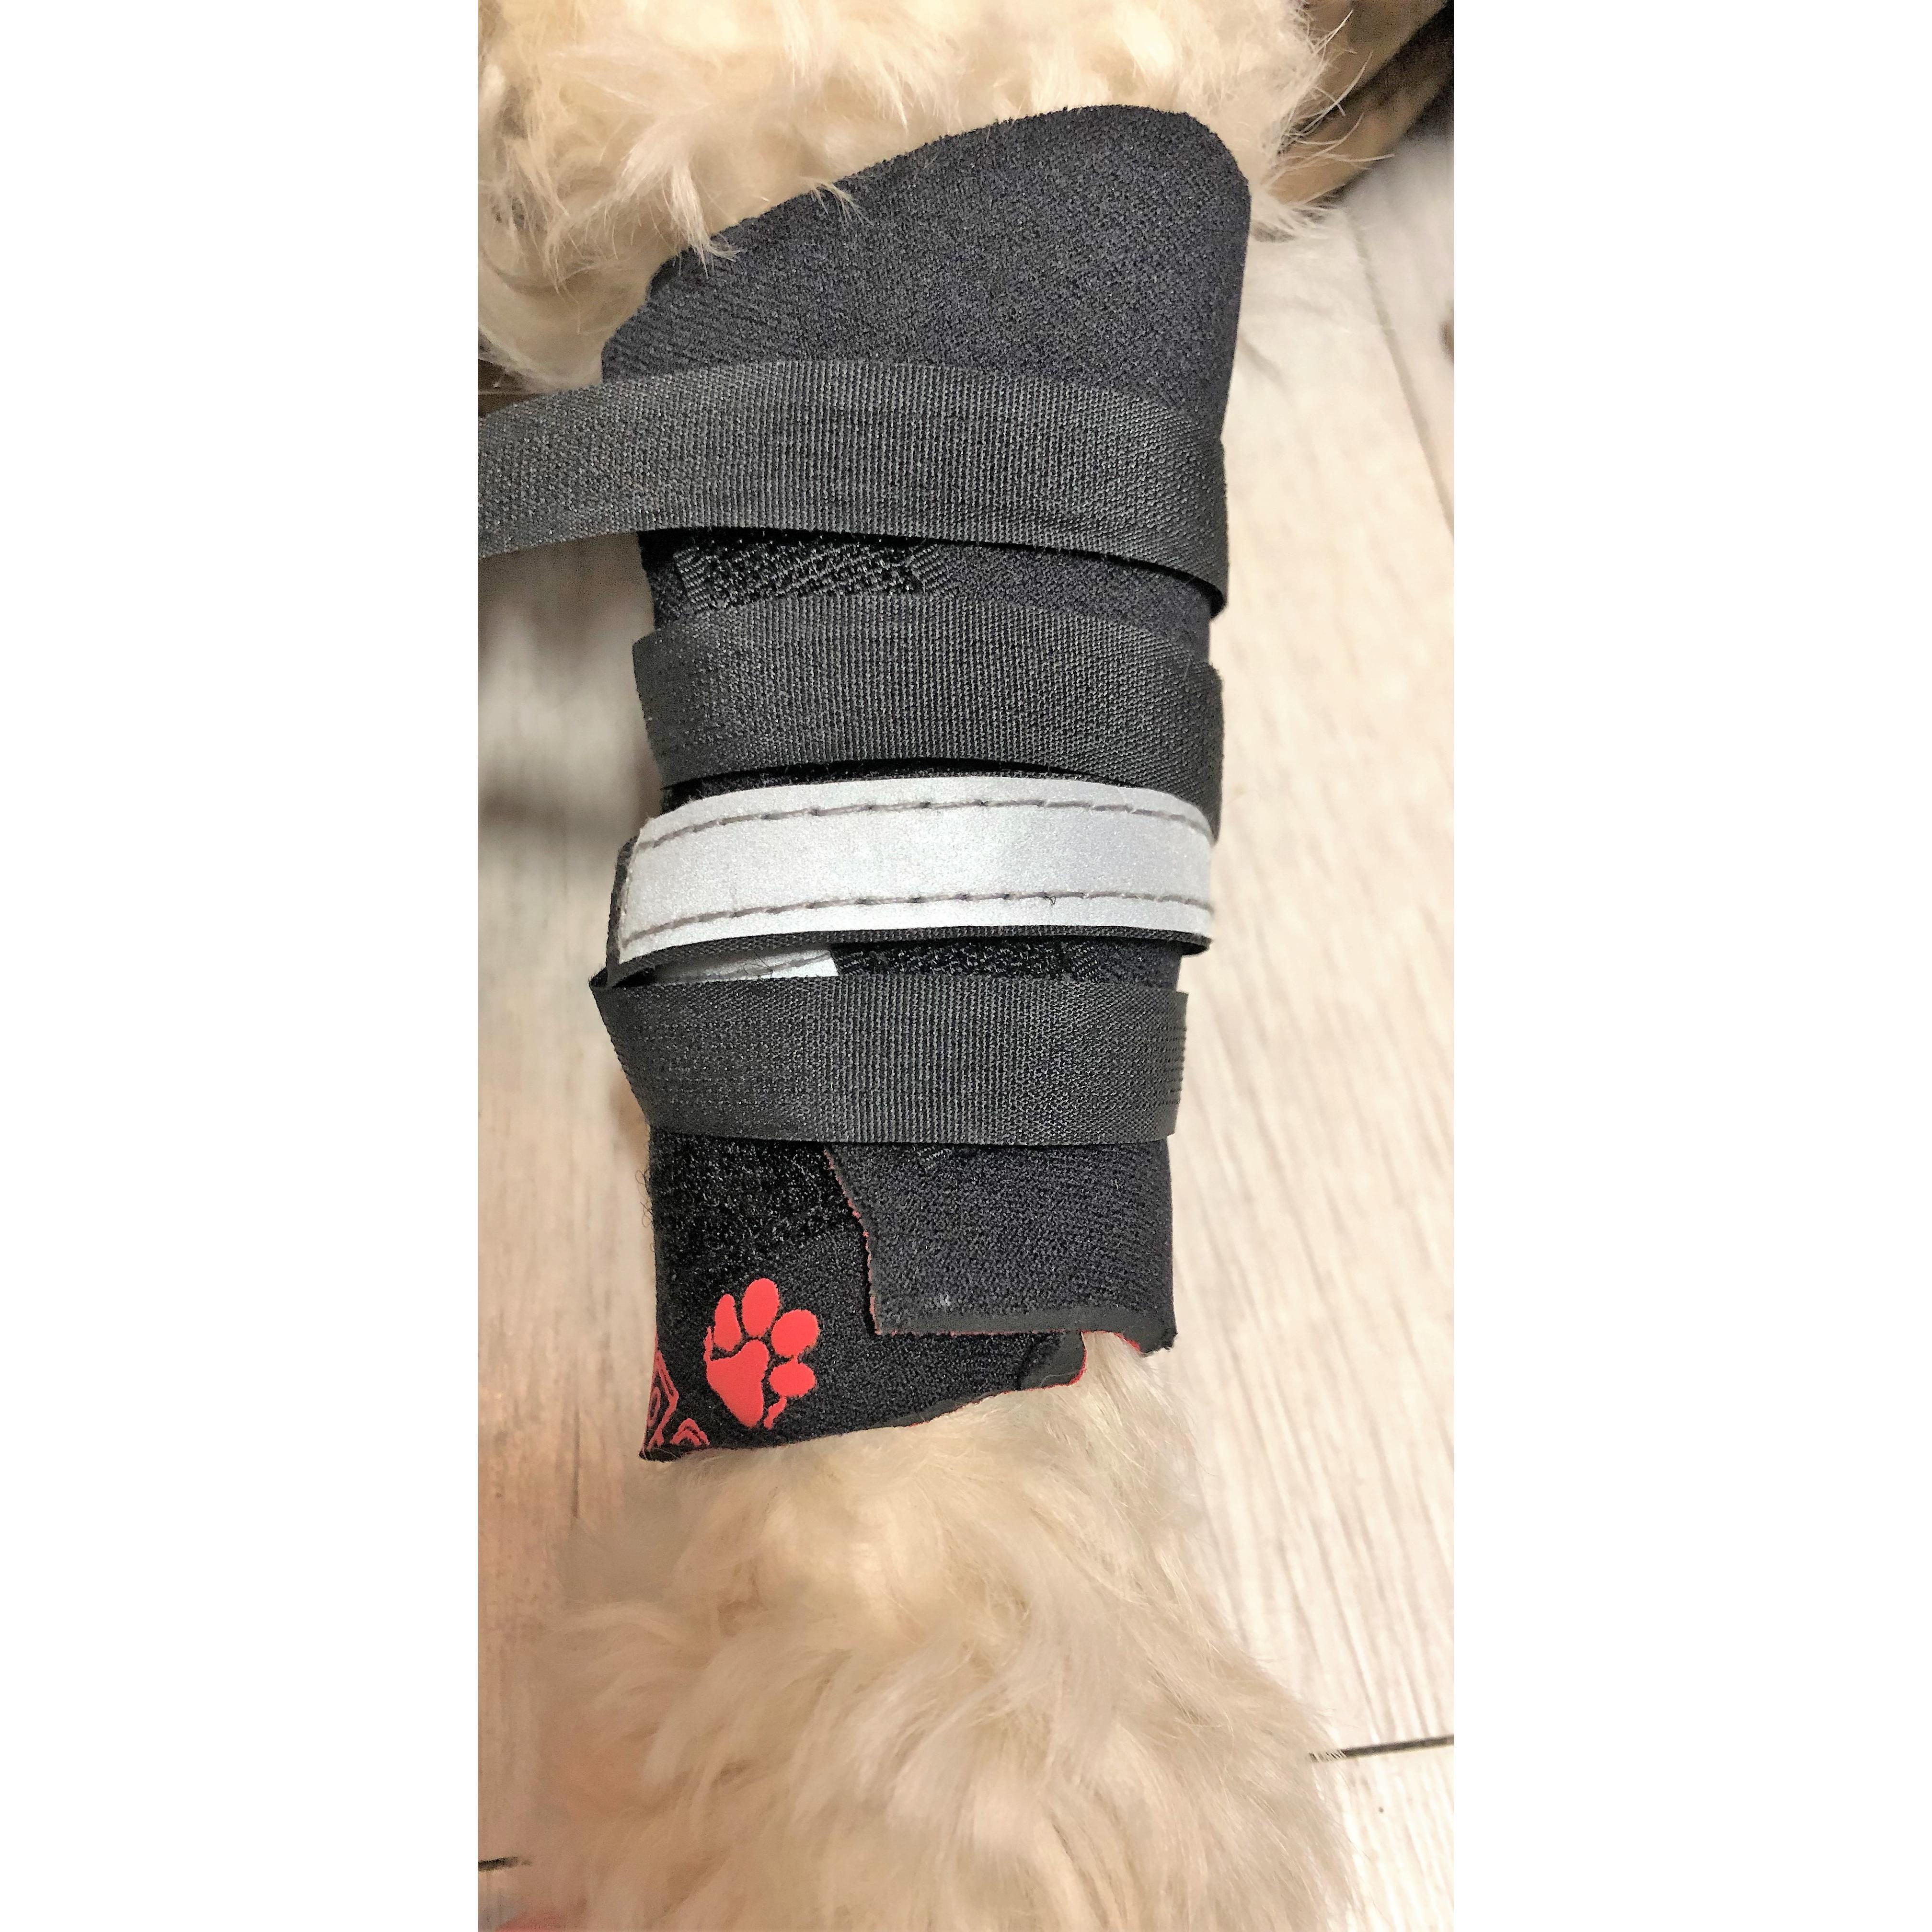 Leg wraps for dogs, Neoprene leg wraps for Dogs with arthritis